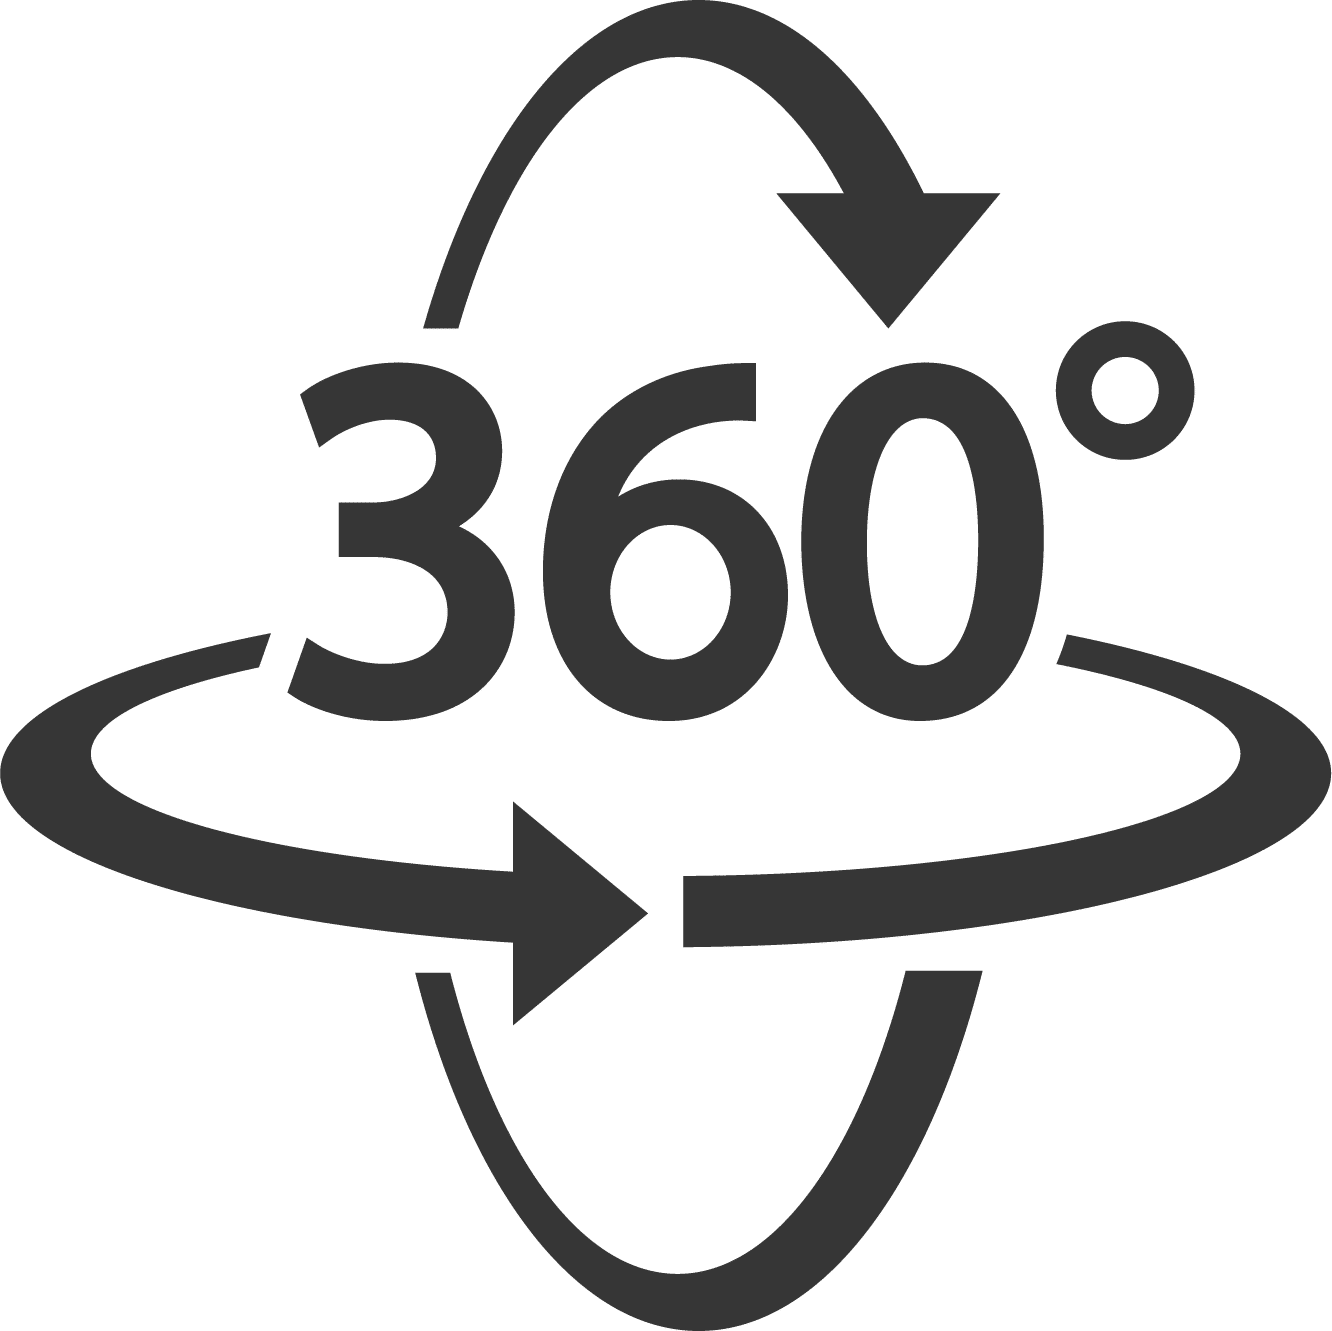 360° VR Tour Symbol Image